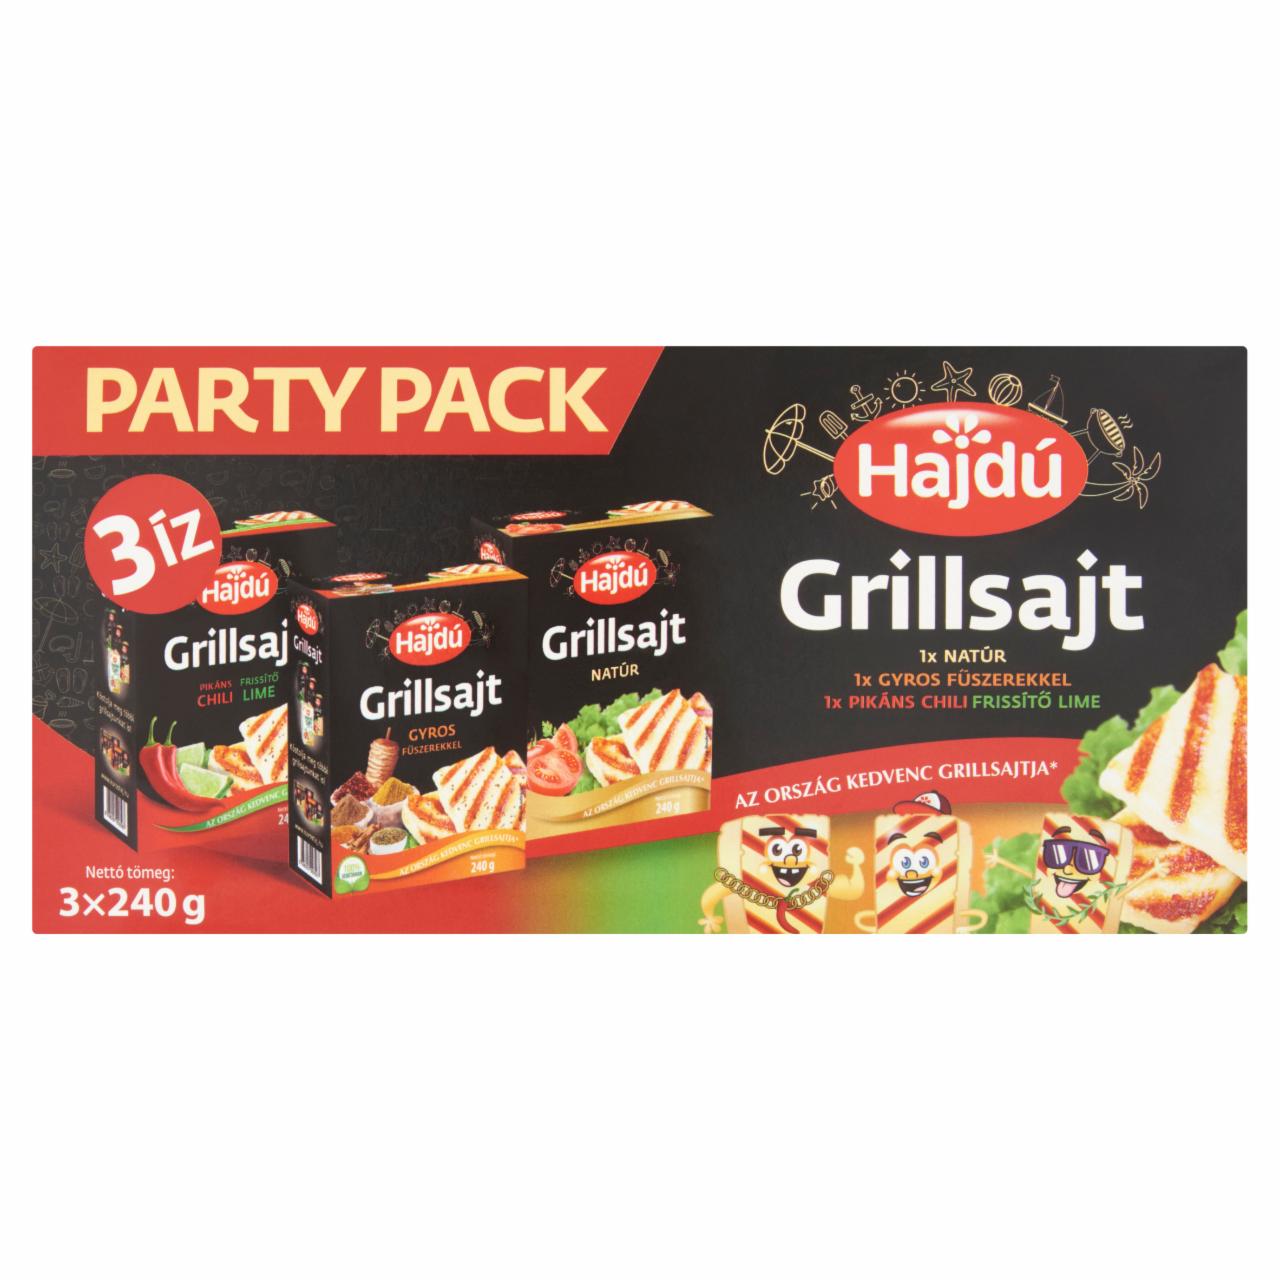 Képek - Hajdú Party Pack grillsajt 3 x 240 g